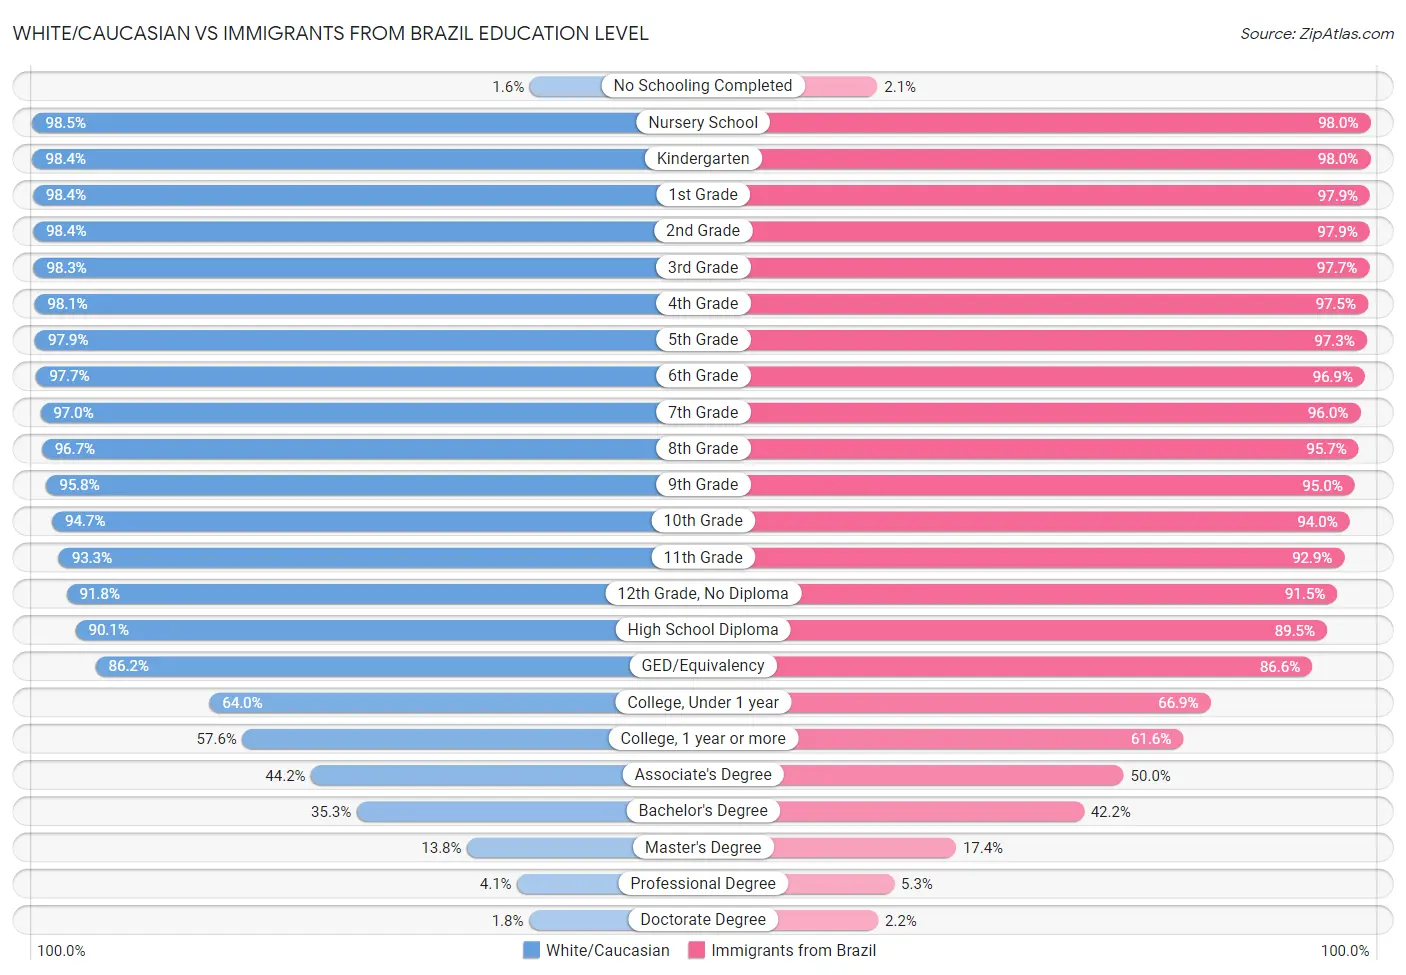 White/Caucasian vs Immigrants from Brazil Education Level